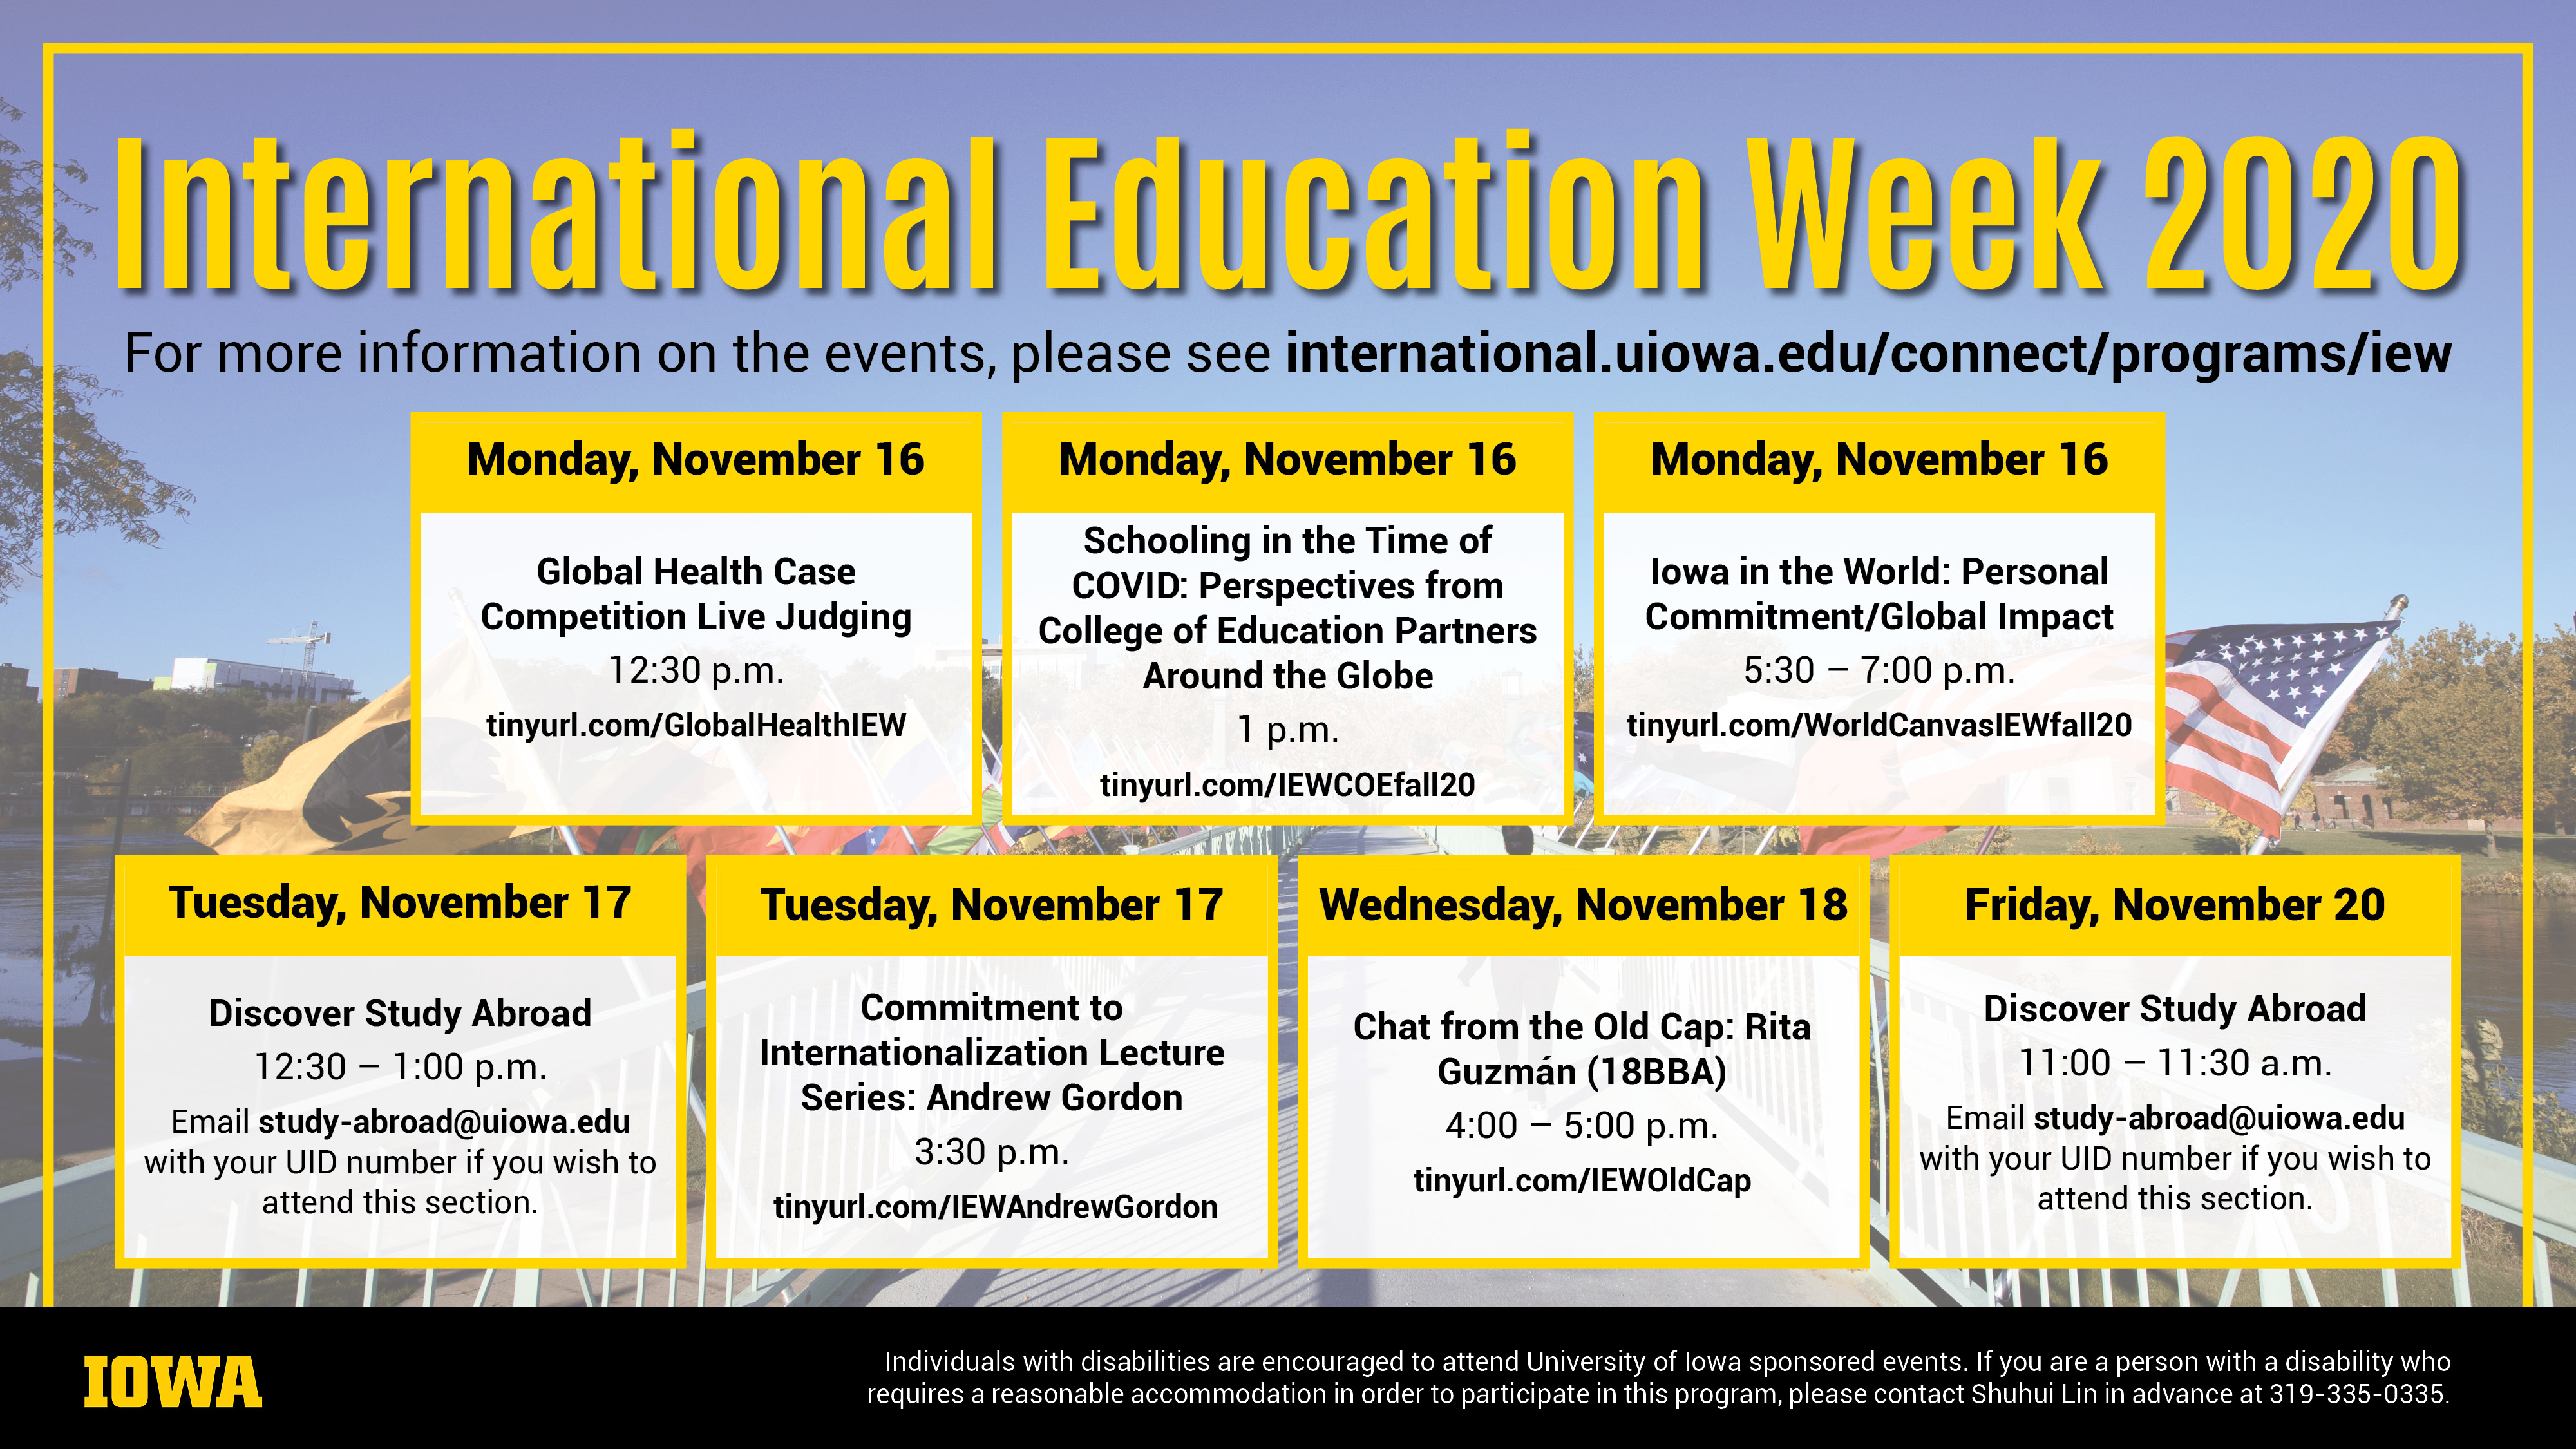 International Education Week 2020 events